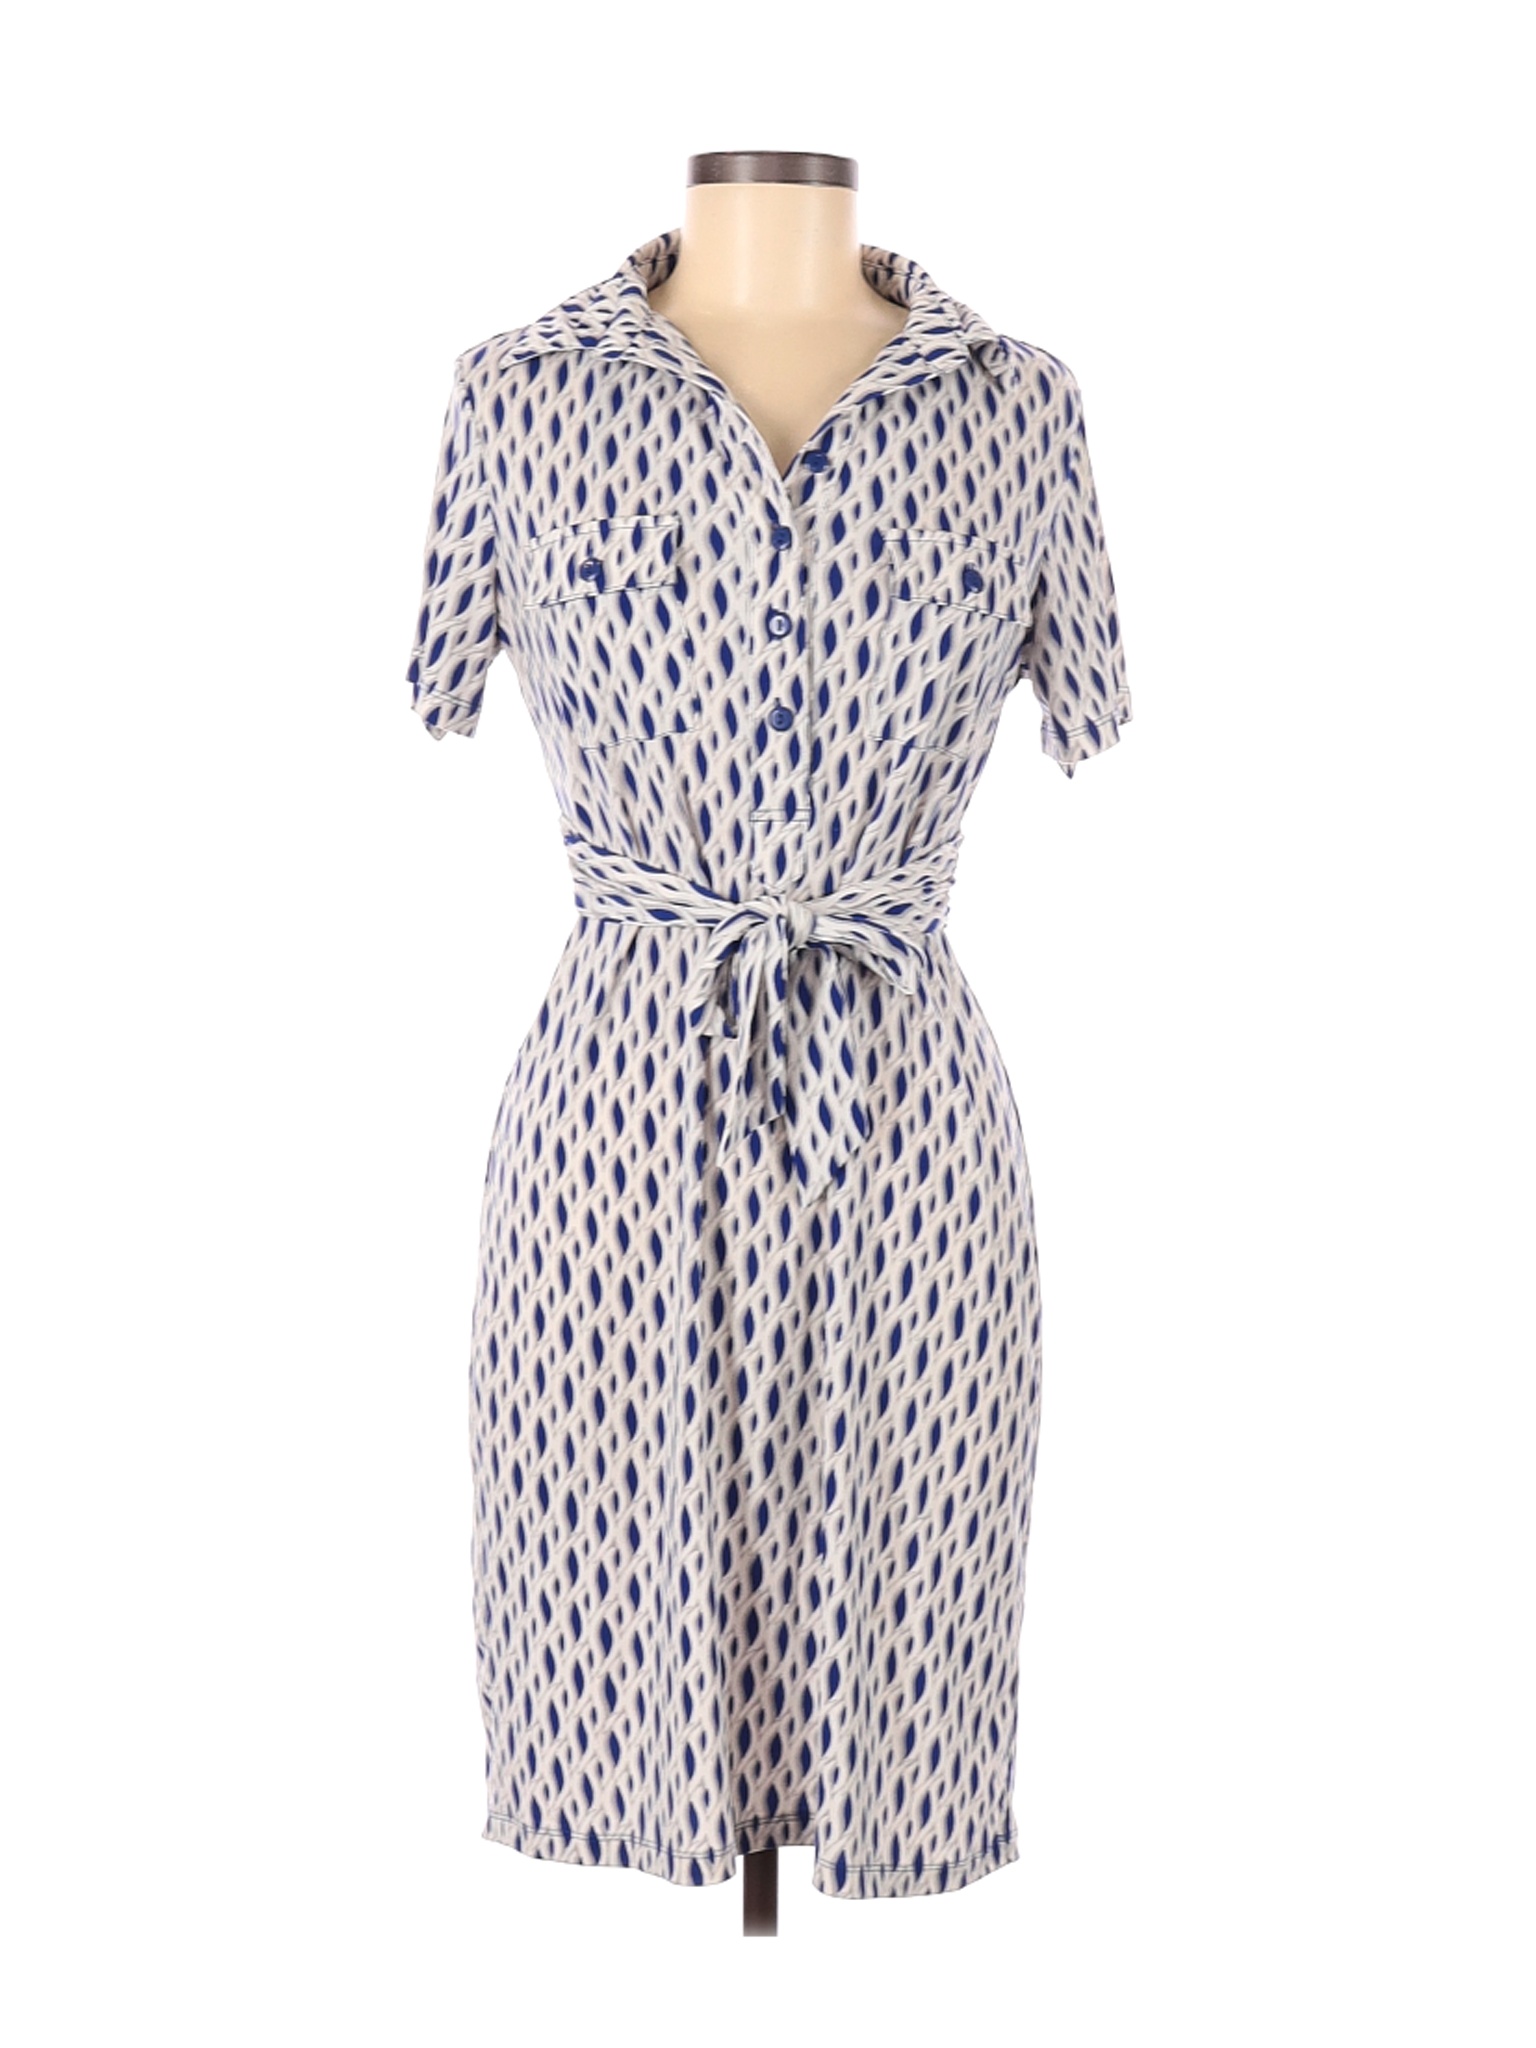 Valerie Bertinelli Women Blue Casual Dress 6 | eBay